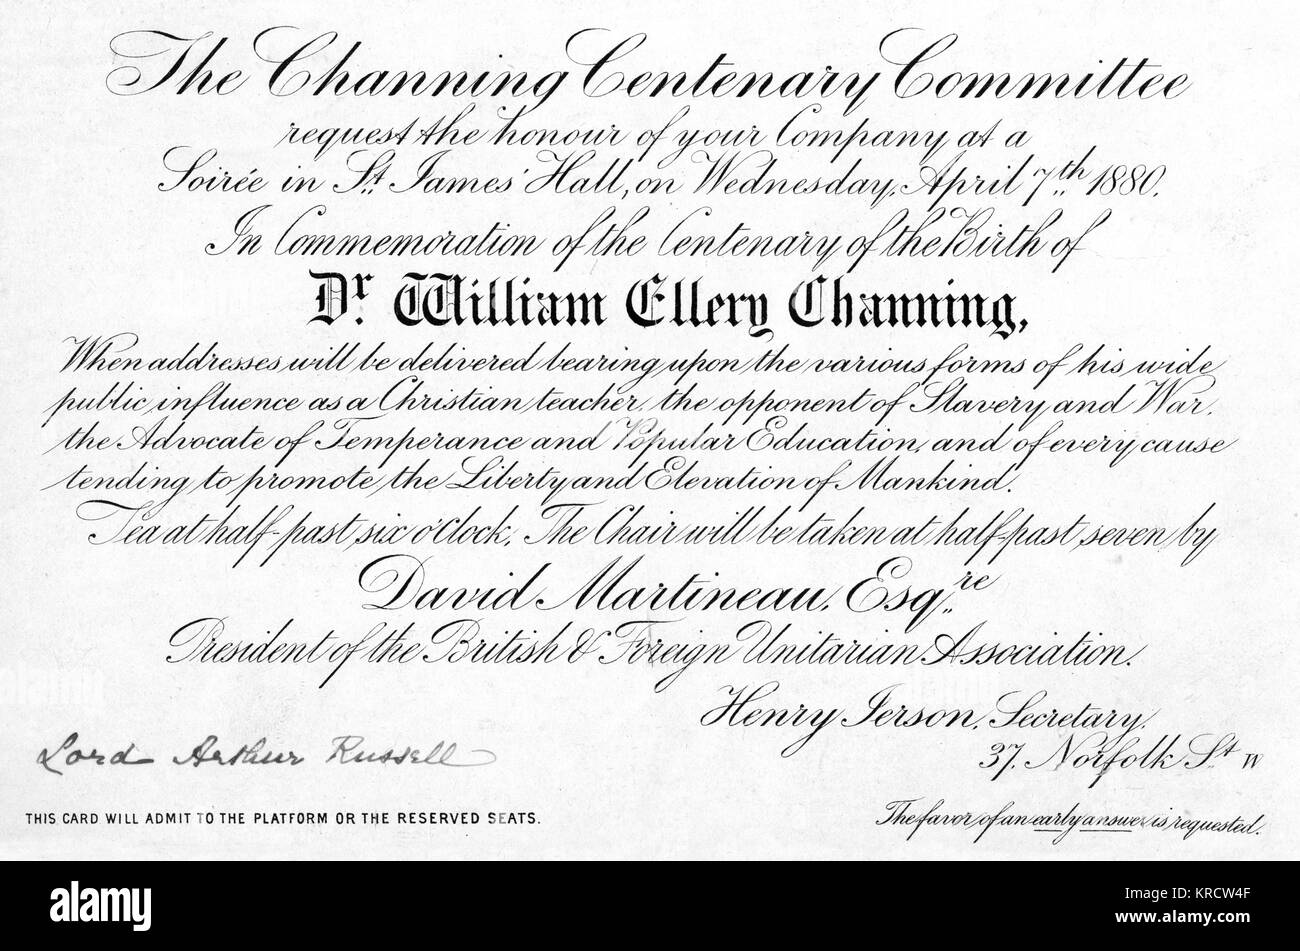 William Ellery Channing centenary invitation card Stock Photo